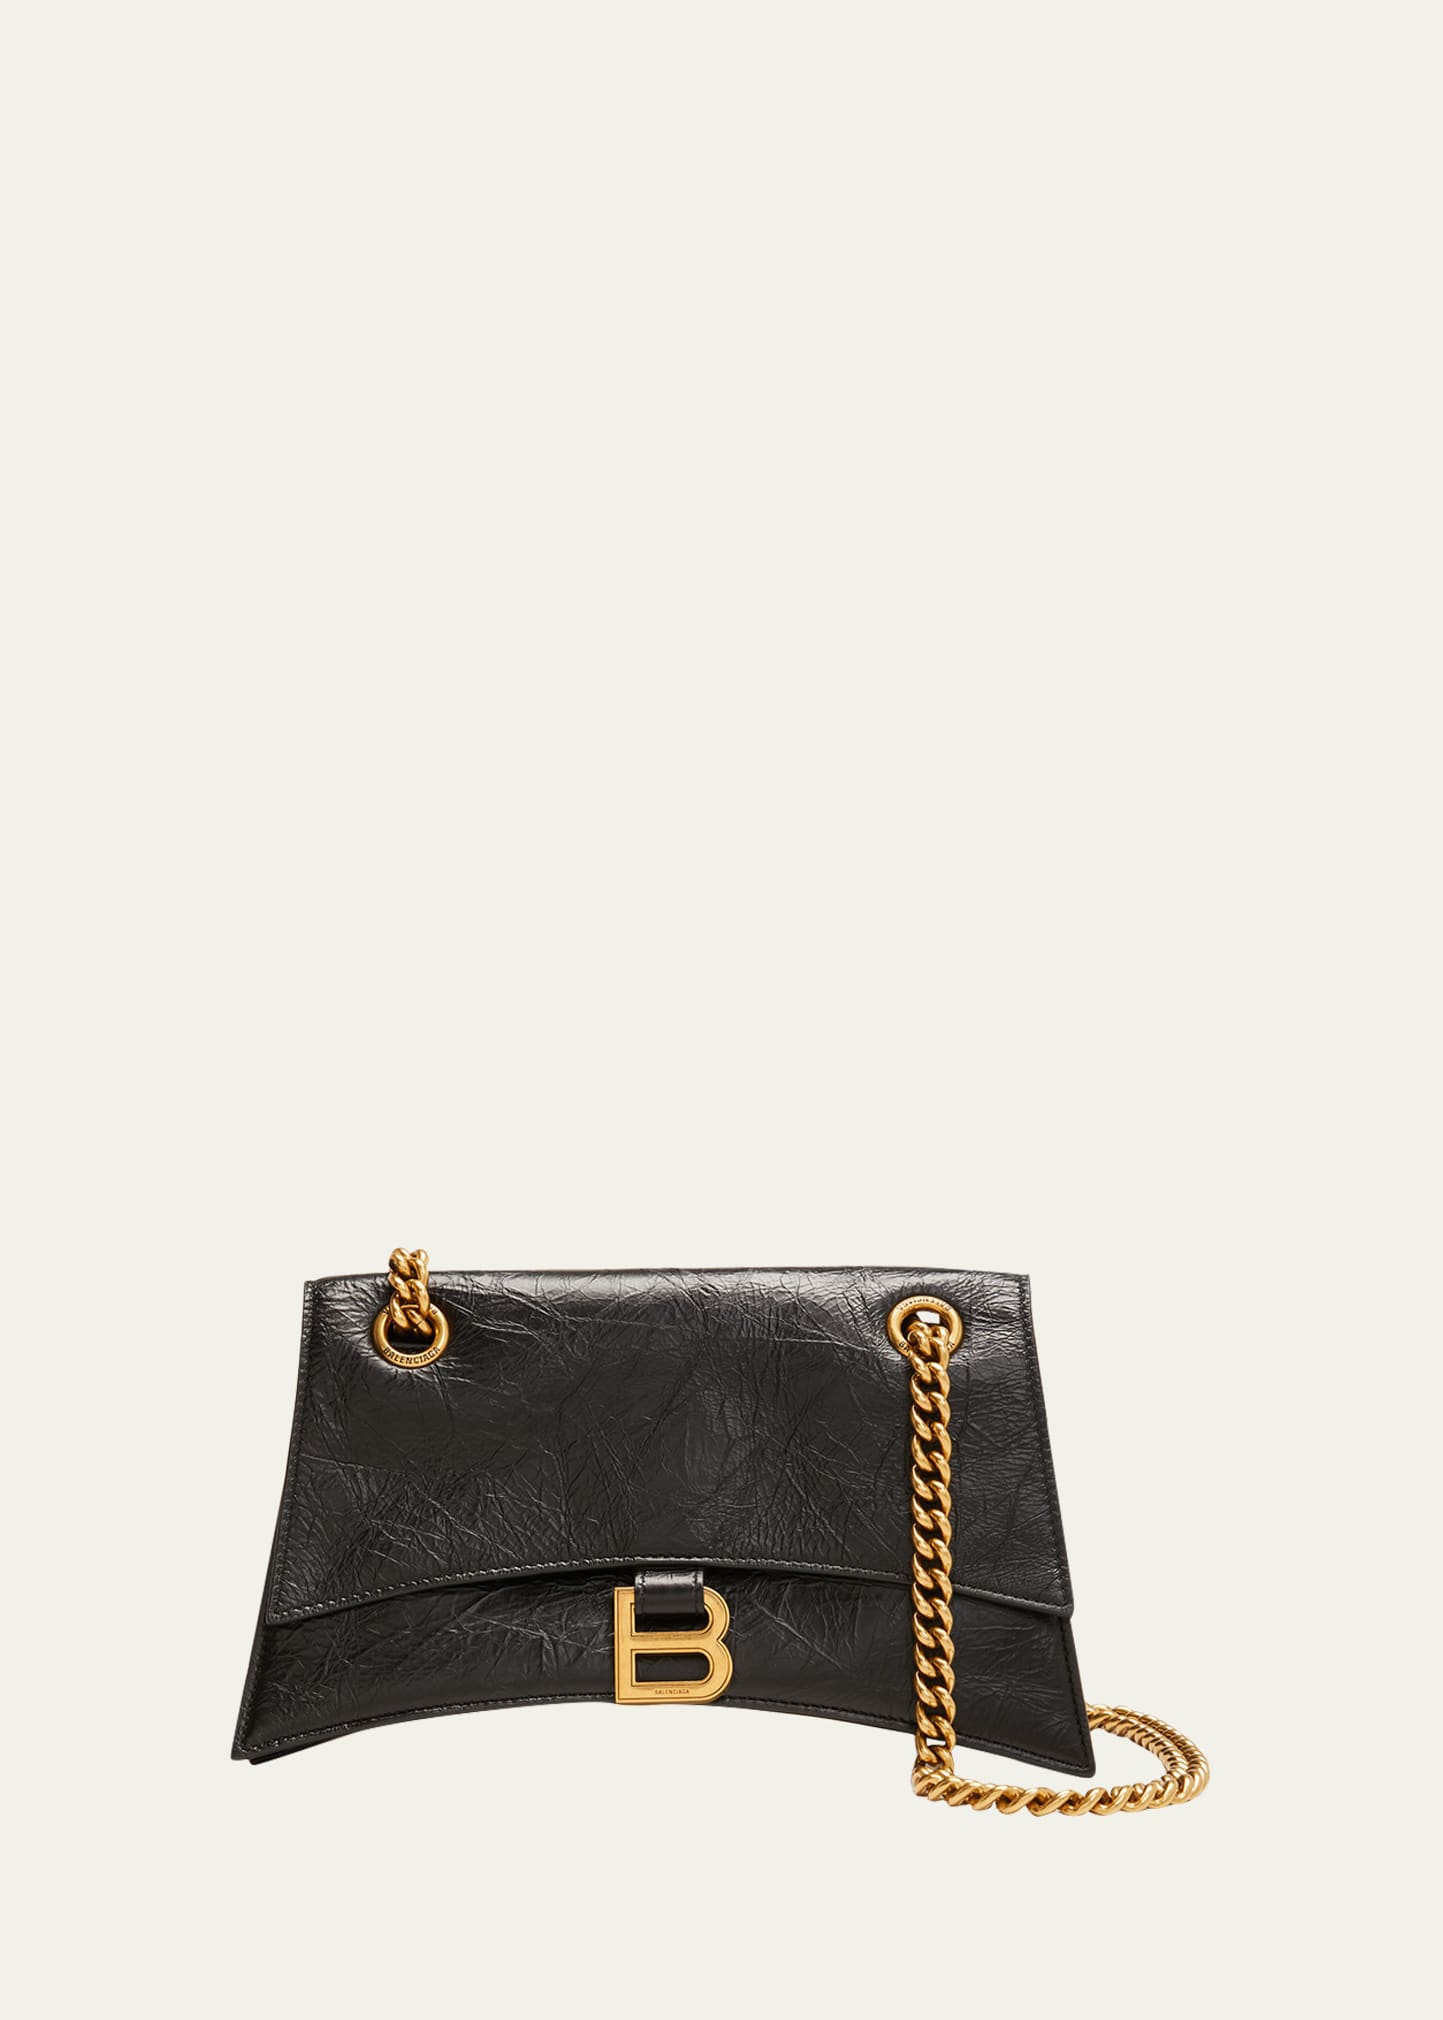 Balenciaga Crush Small Crinkled Leather Shoulder Bag